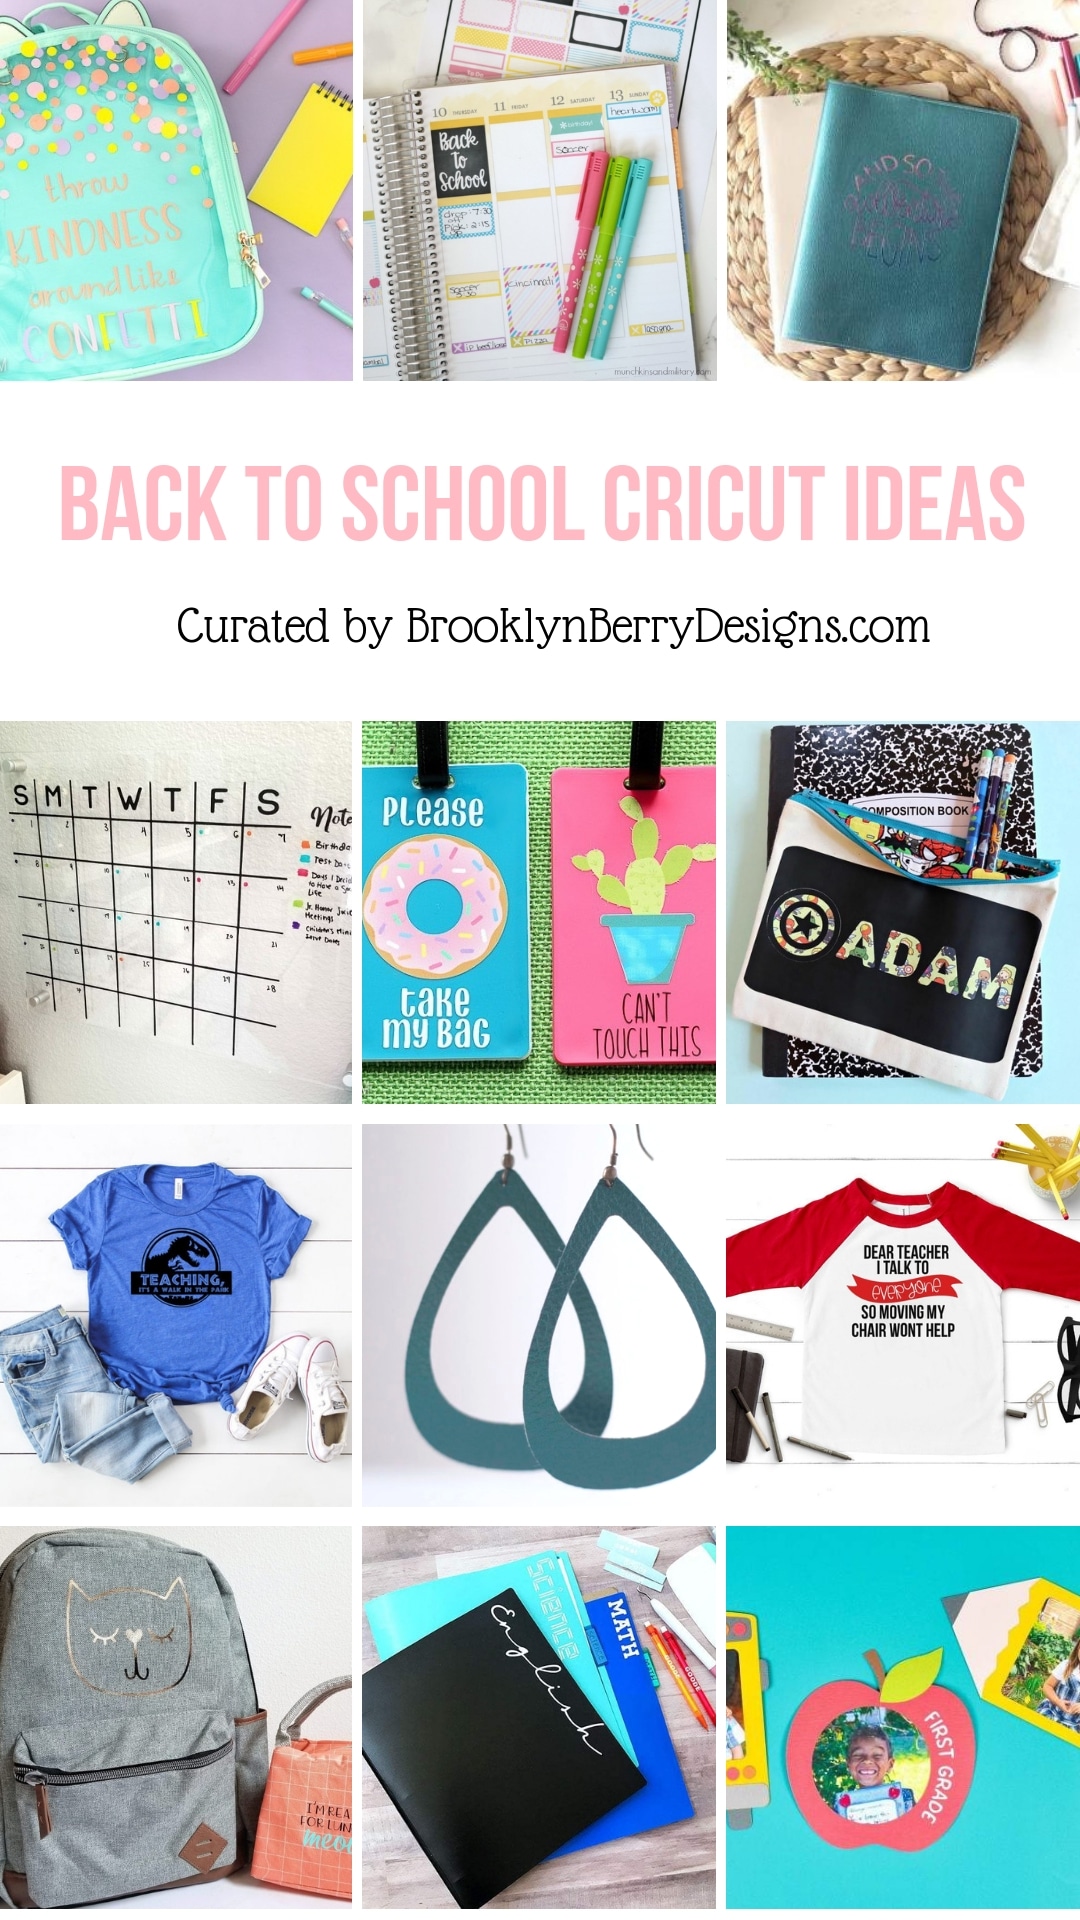 12+ Back To School Cricut Ideas via @brookeberry